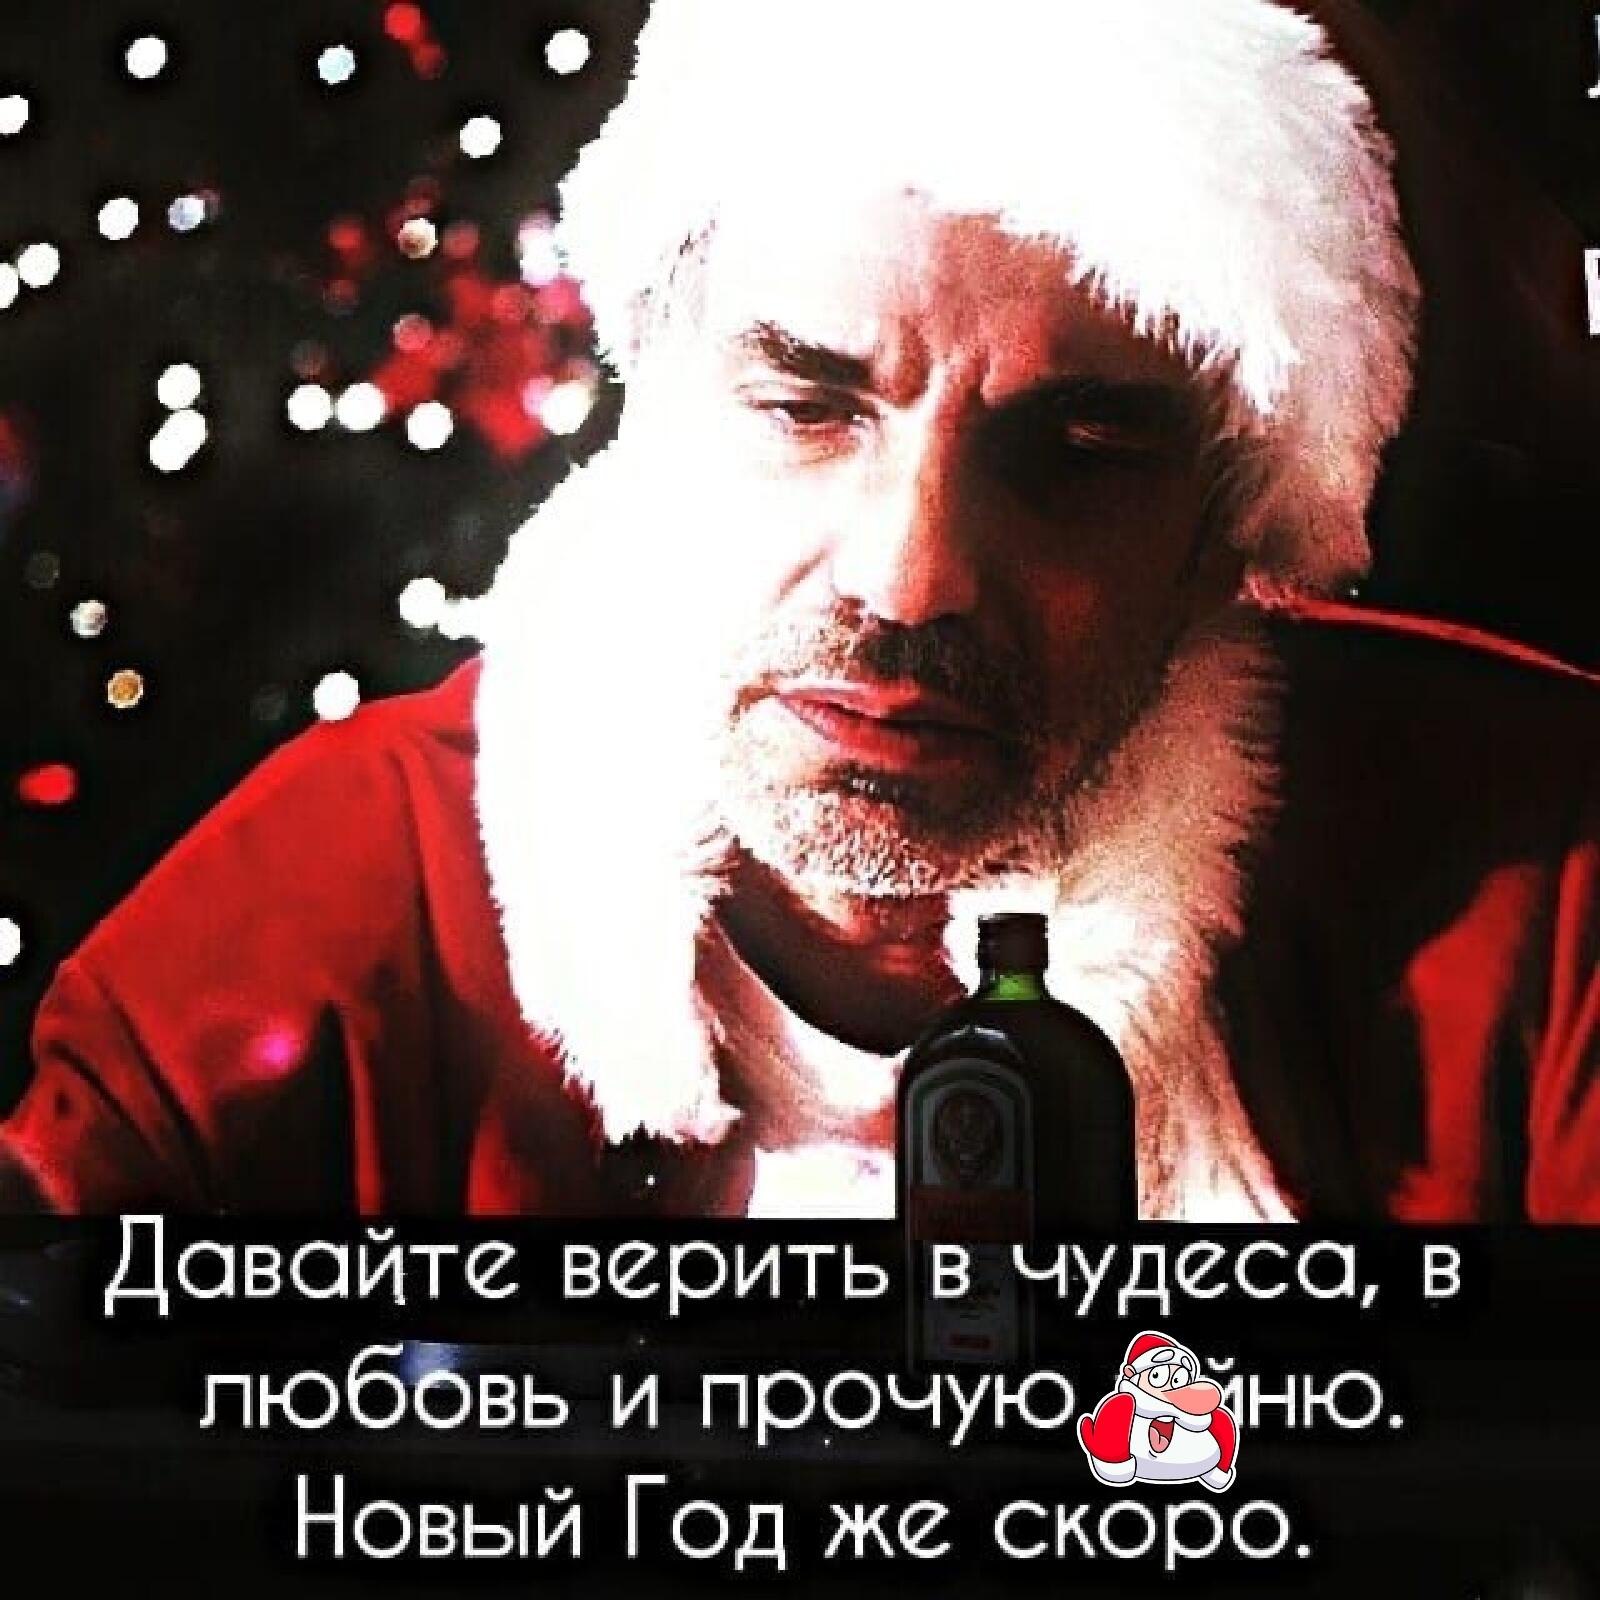 Плохой Санта / Bad Santa (2003)